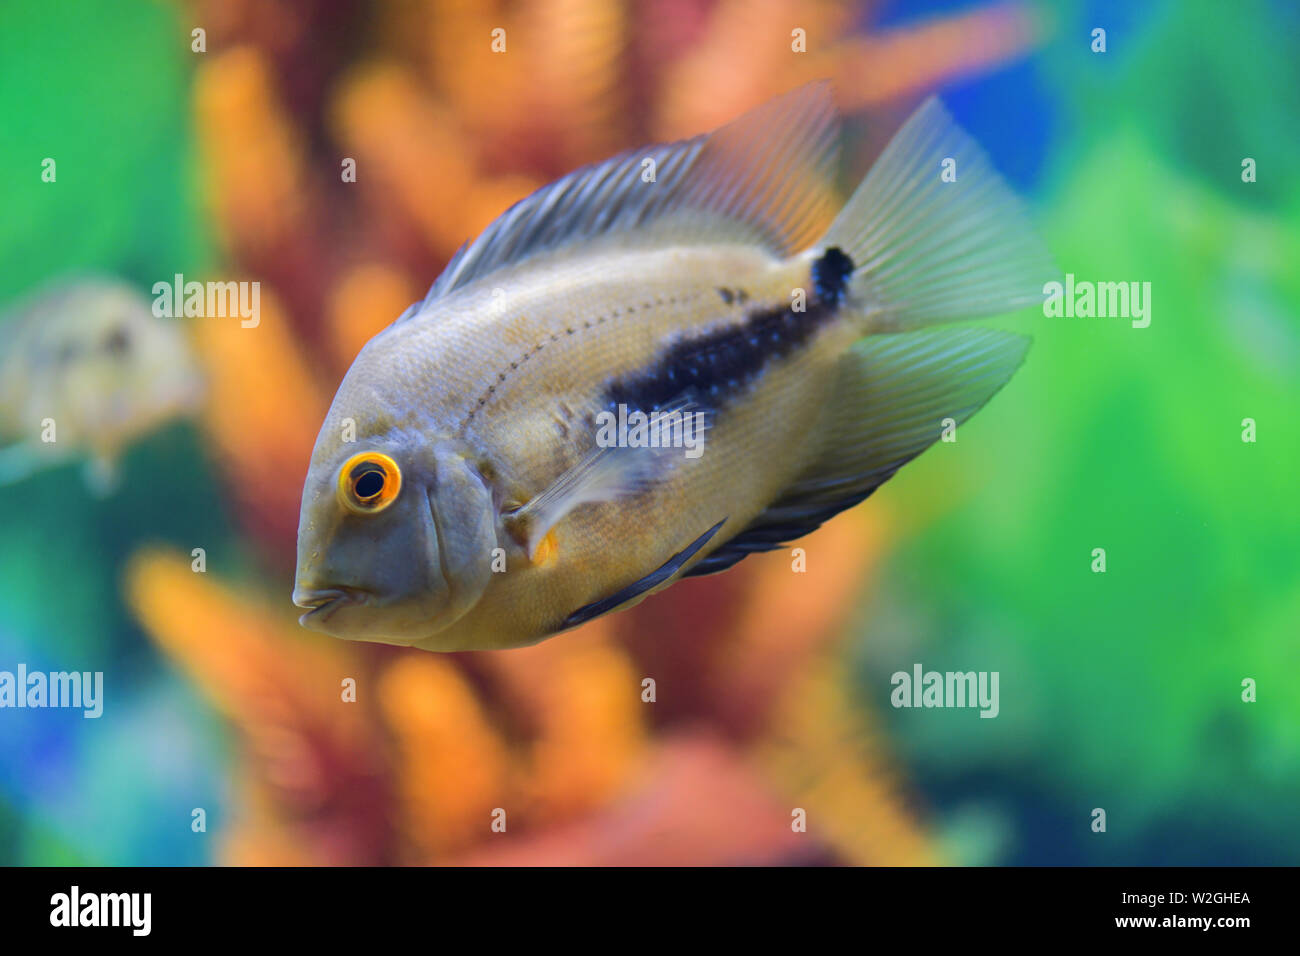 Uaru amphiacanthoide  black-spotted fish swims in a transparent aquarium with a beautiful bright design Stock Photo